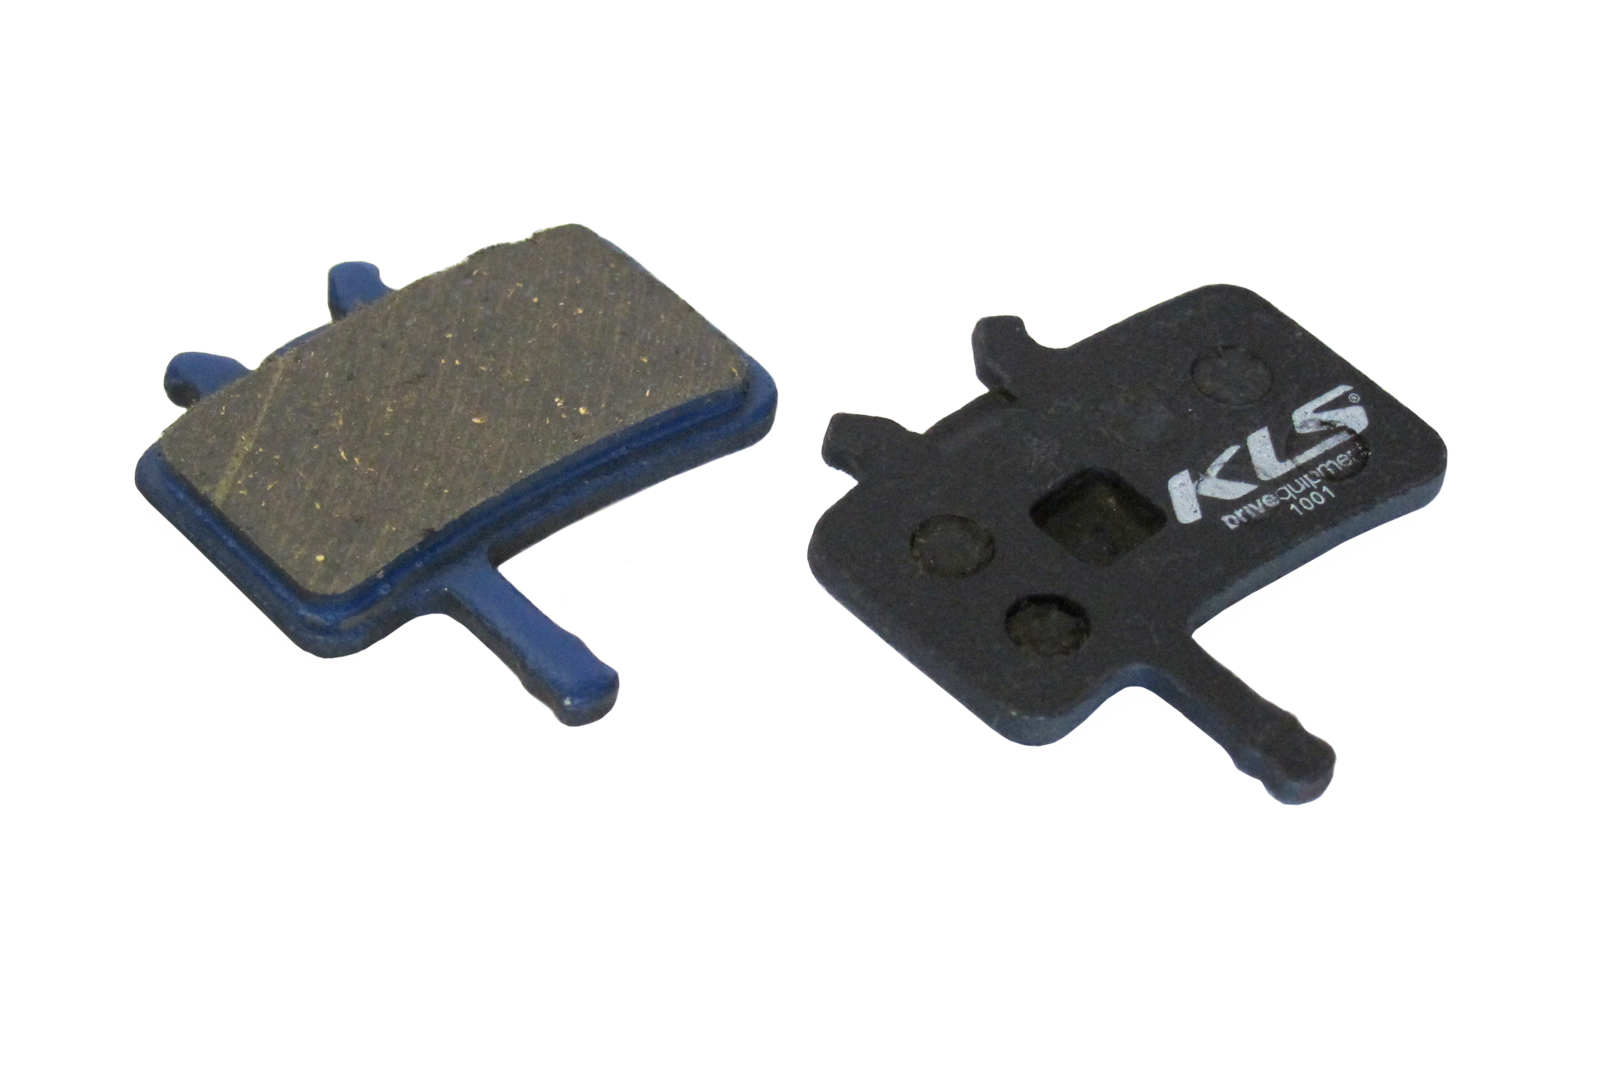 Brzdové platničky KLS D-02, organické (pár)